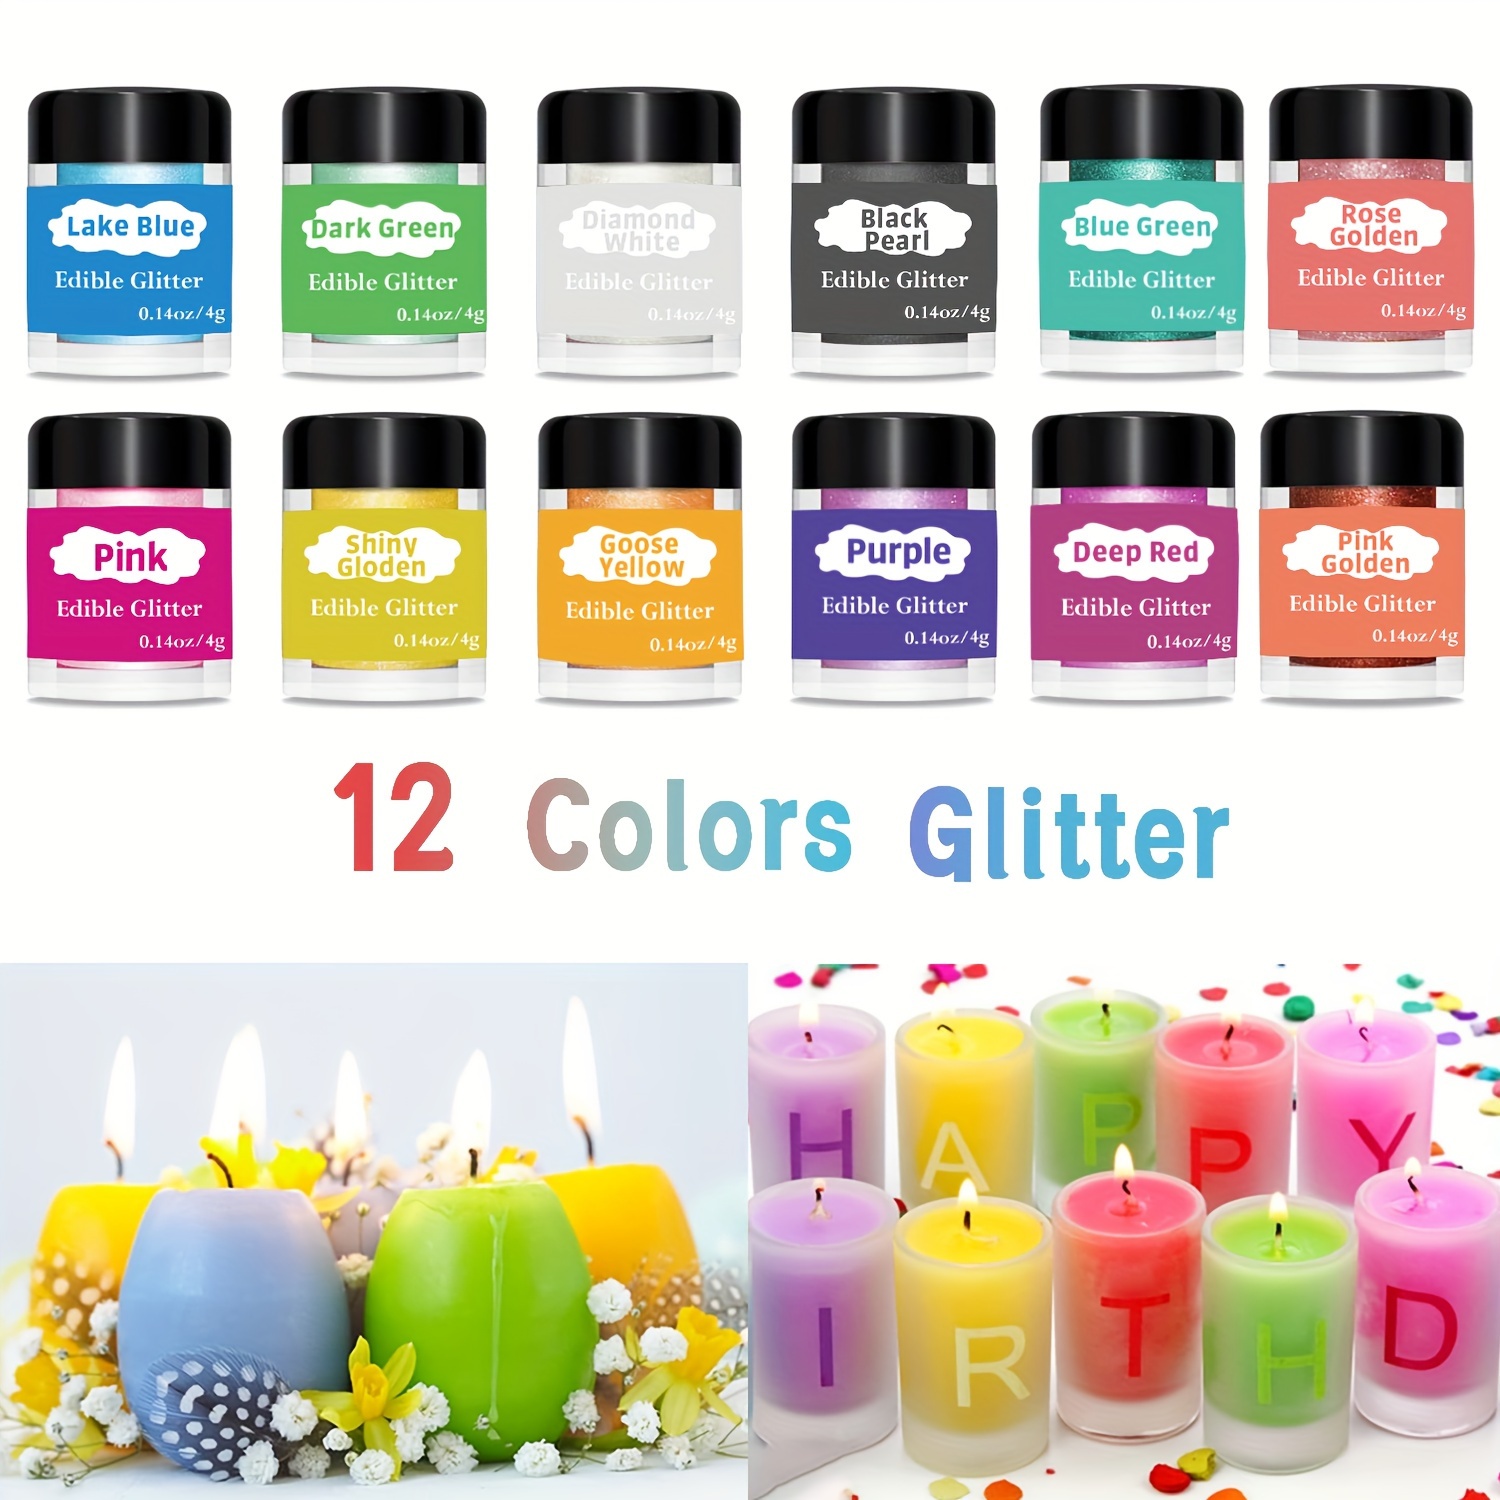 Glitter And Crafts 4U -Glow in the Dark Pigment Powder - Water